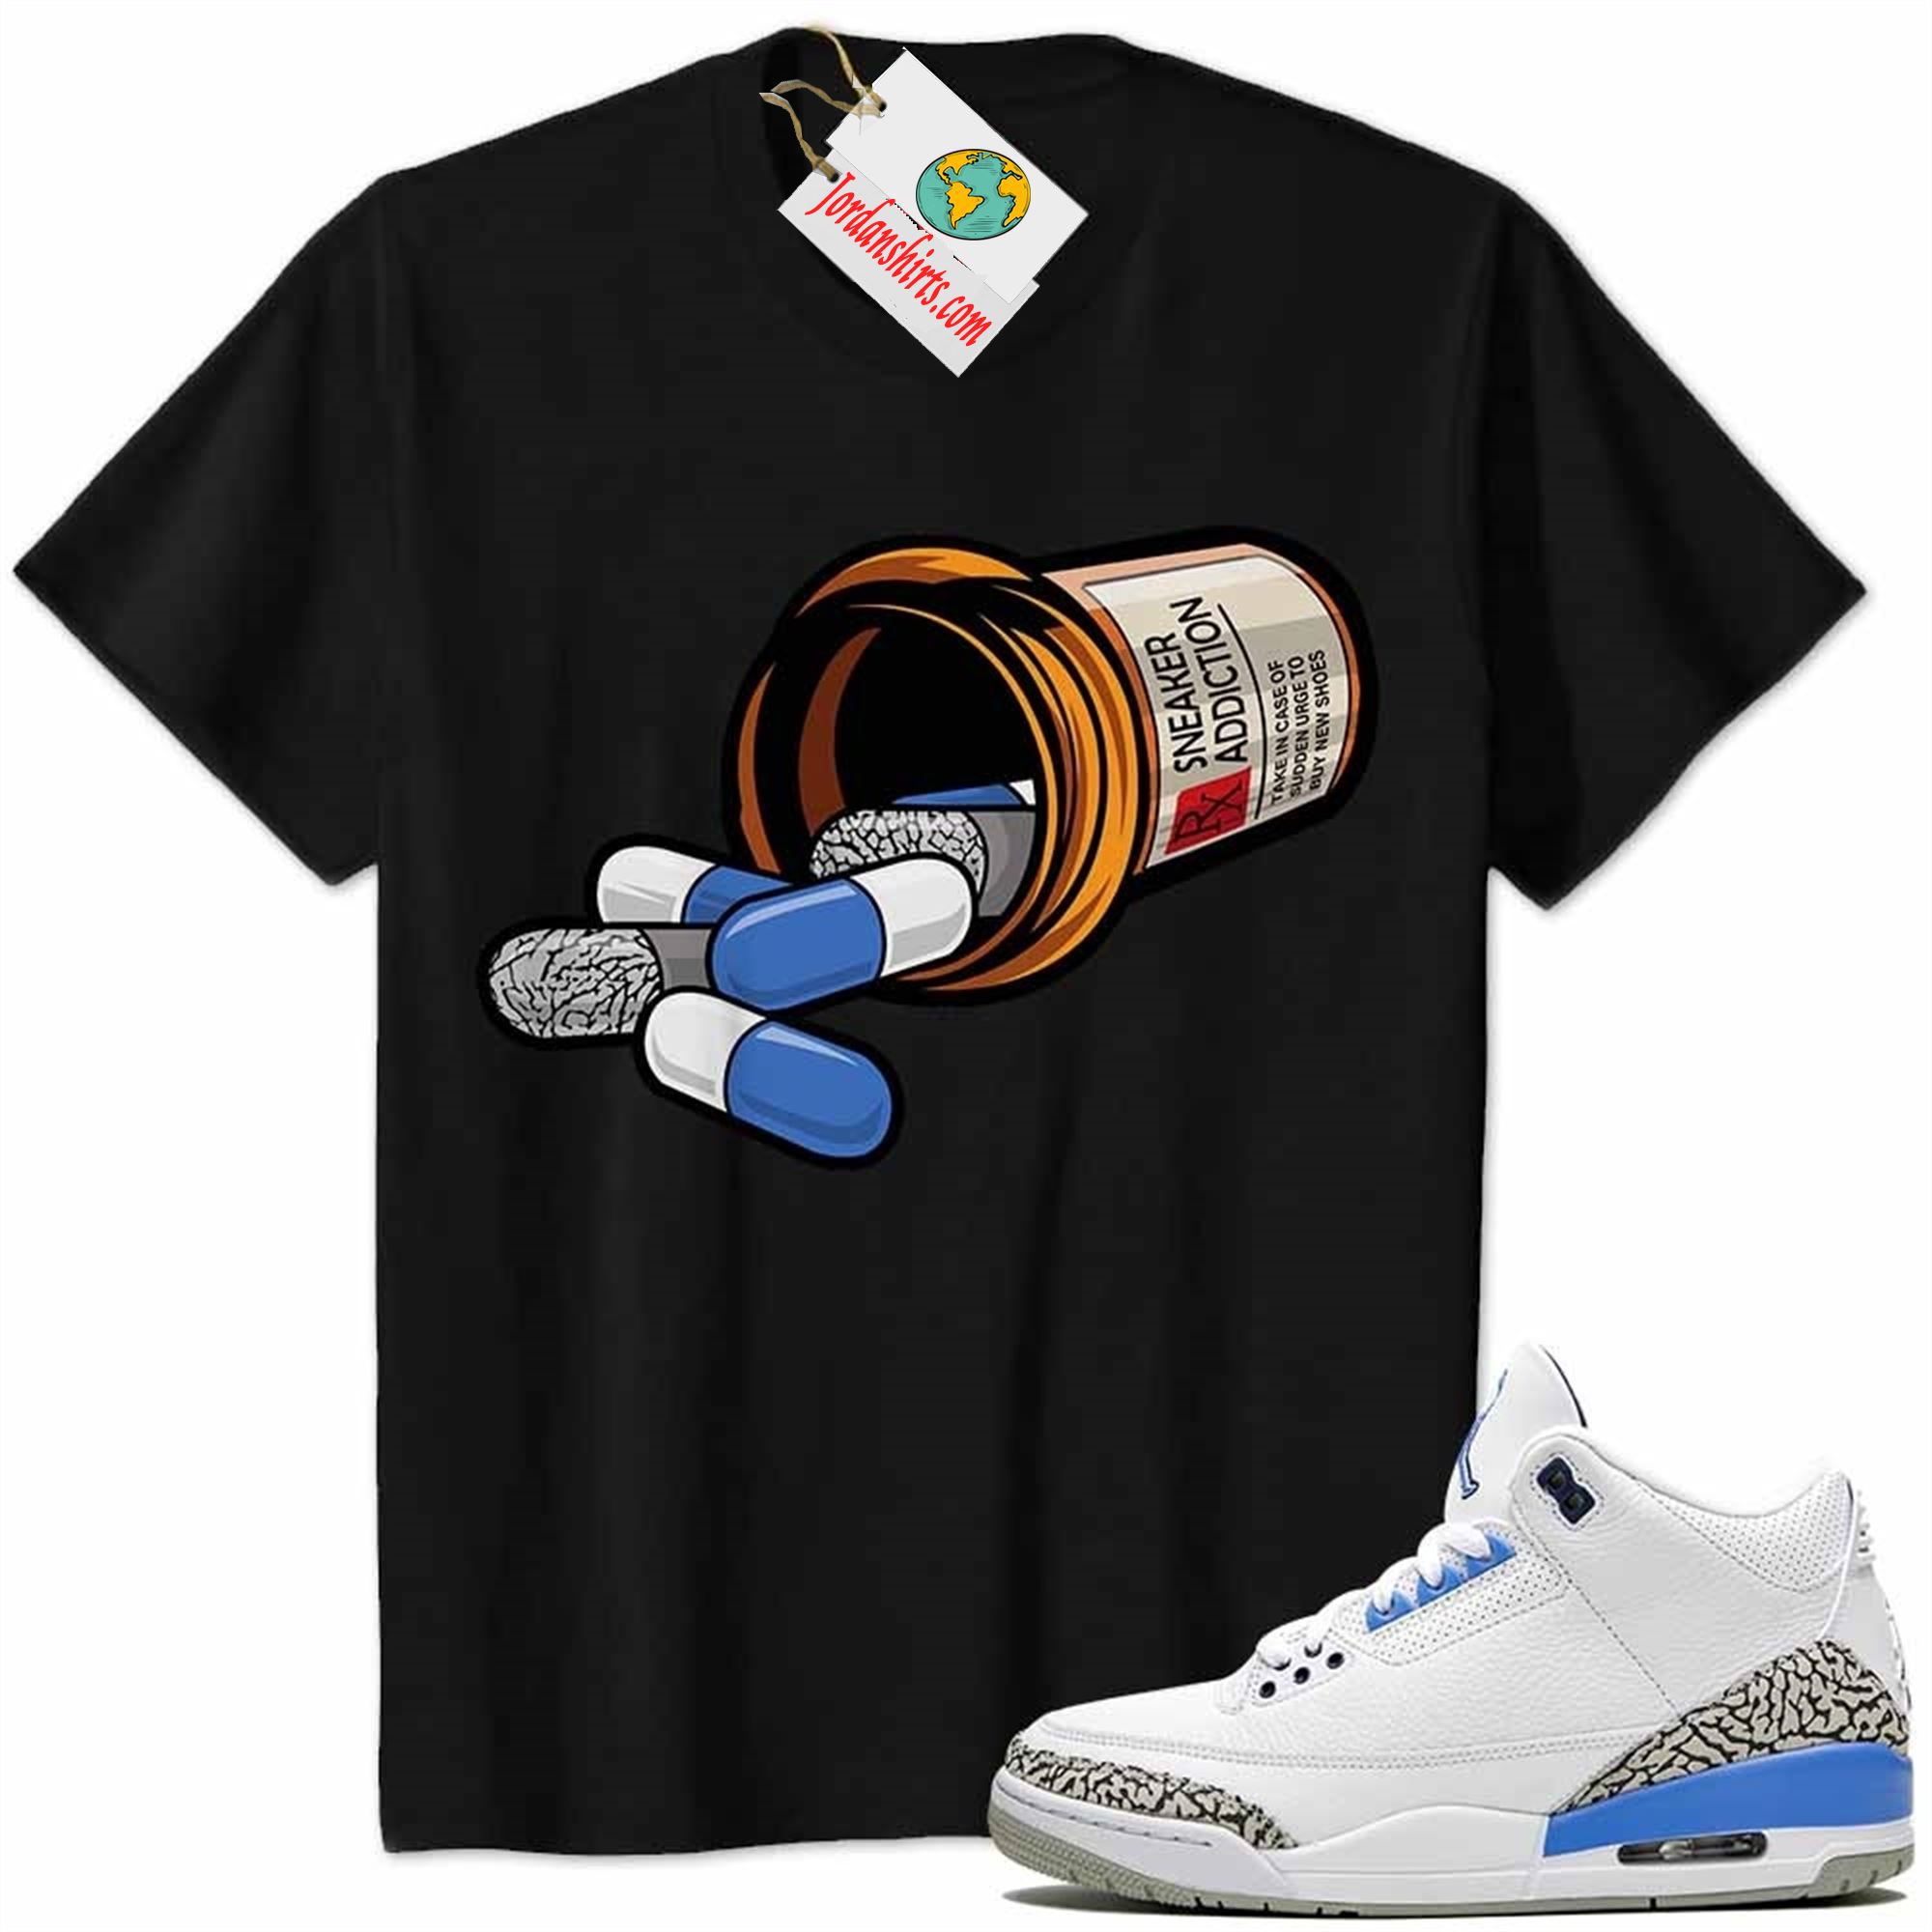 Jordan 3 Shirt, Rx Drugs Pill Bottle Sneaker Addiction Black Air Jordan 3 Unc 3s Plus Size Up To 5xl